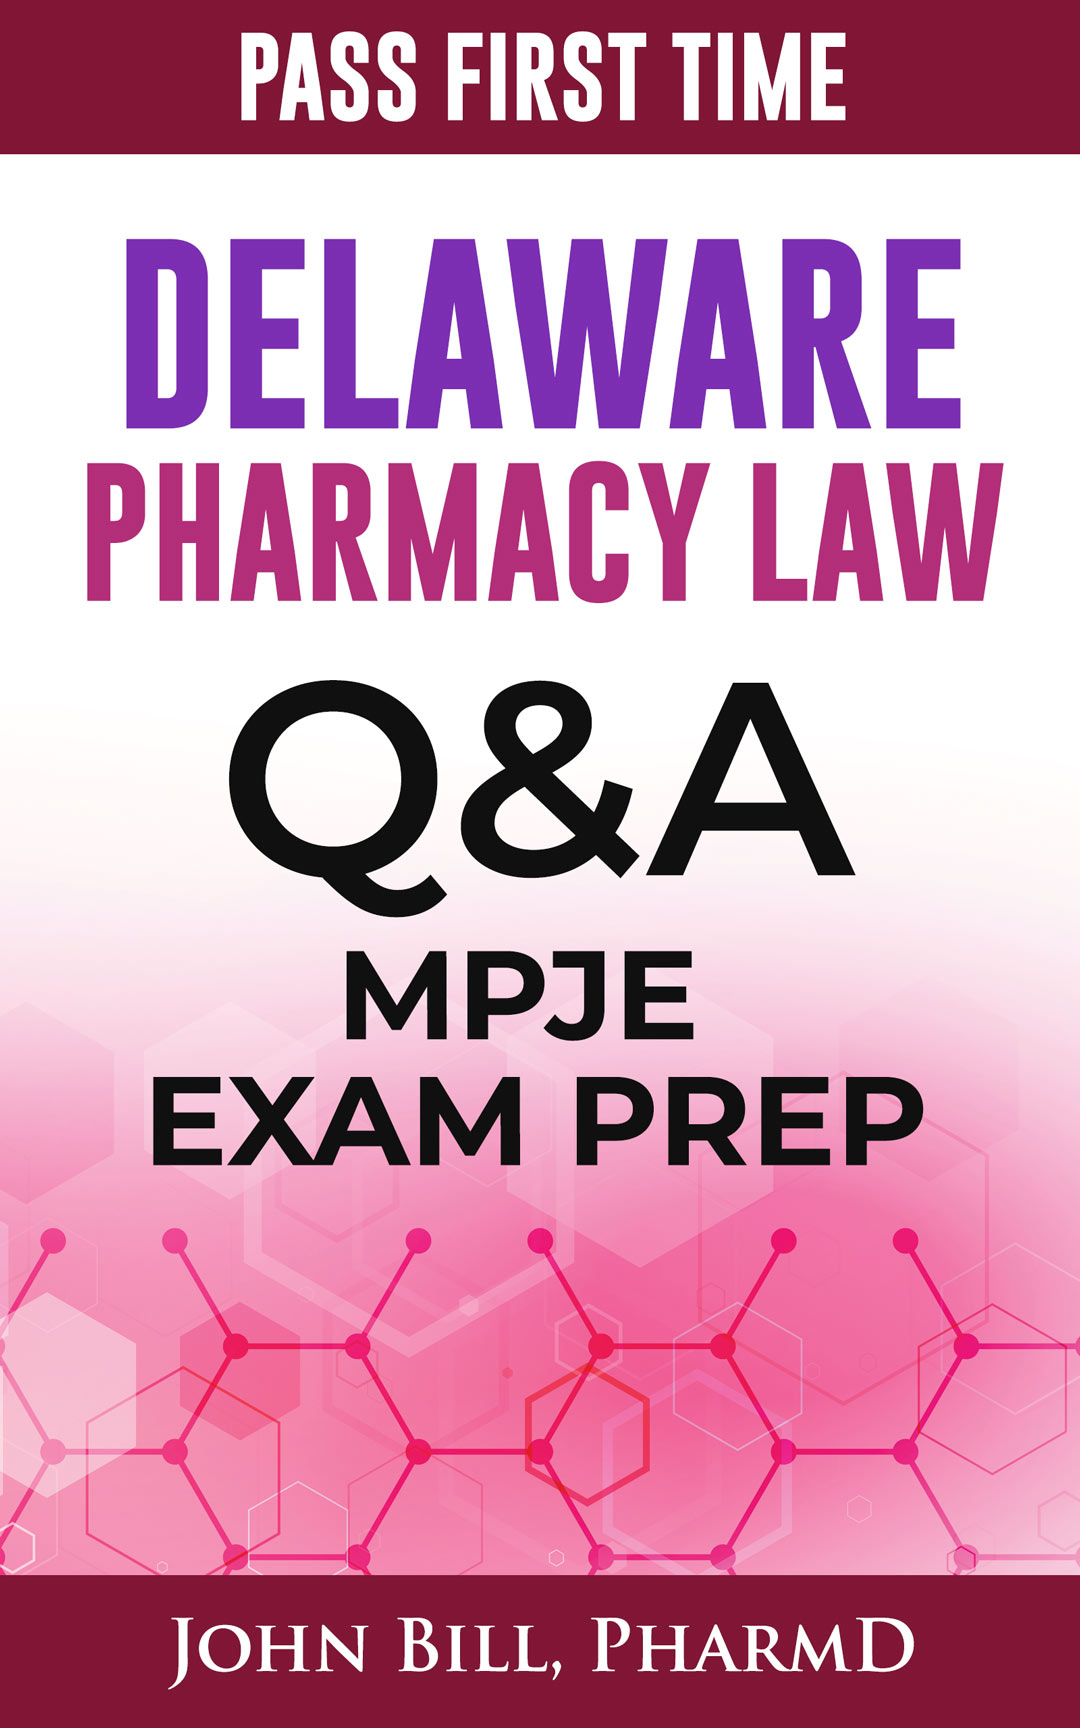 Delaware Pharmacy Law MPJE Exam Prep Q & A